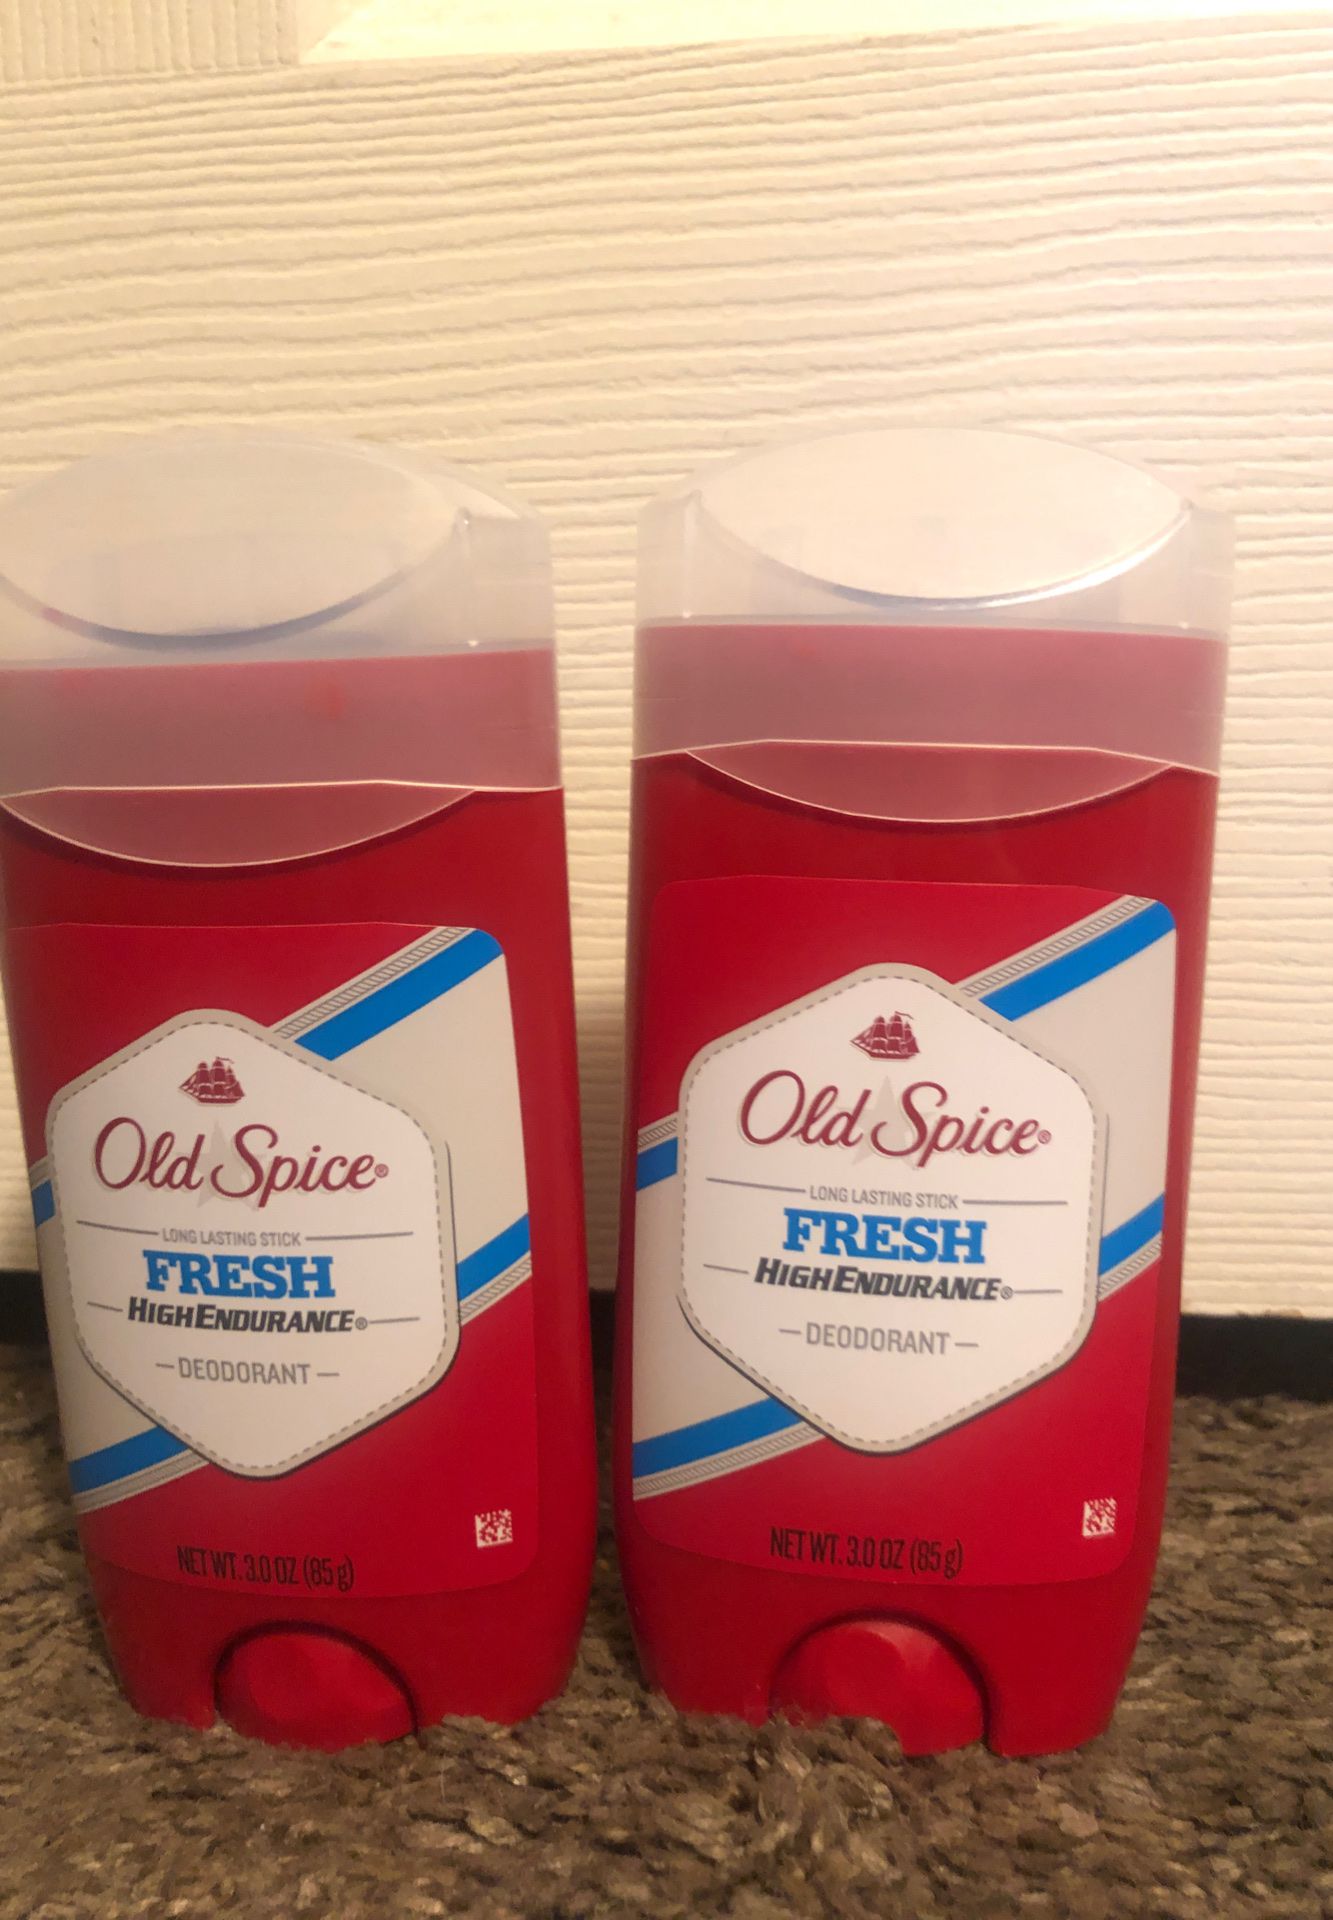 2x Old Spice High Endurance Deodorant “Fresh” (Unopened/brand new)